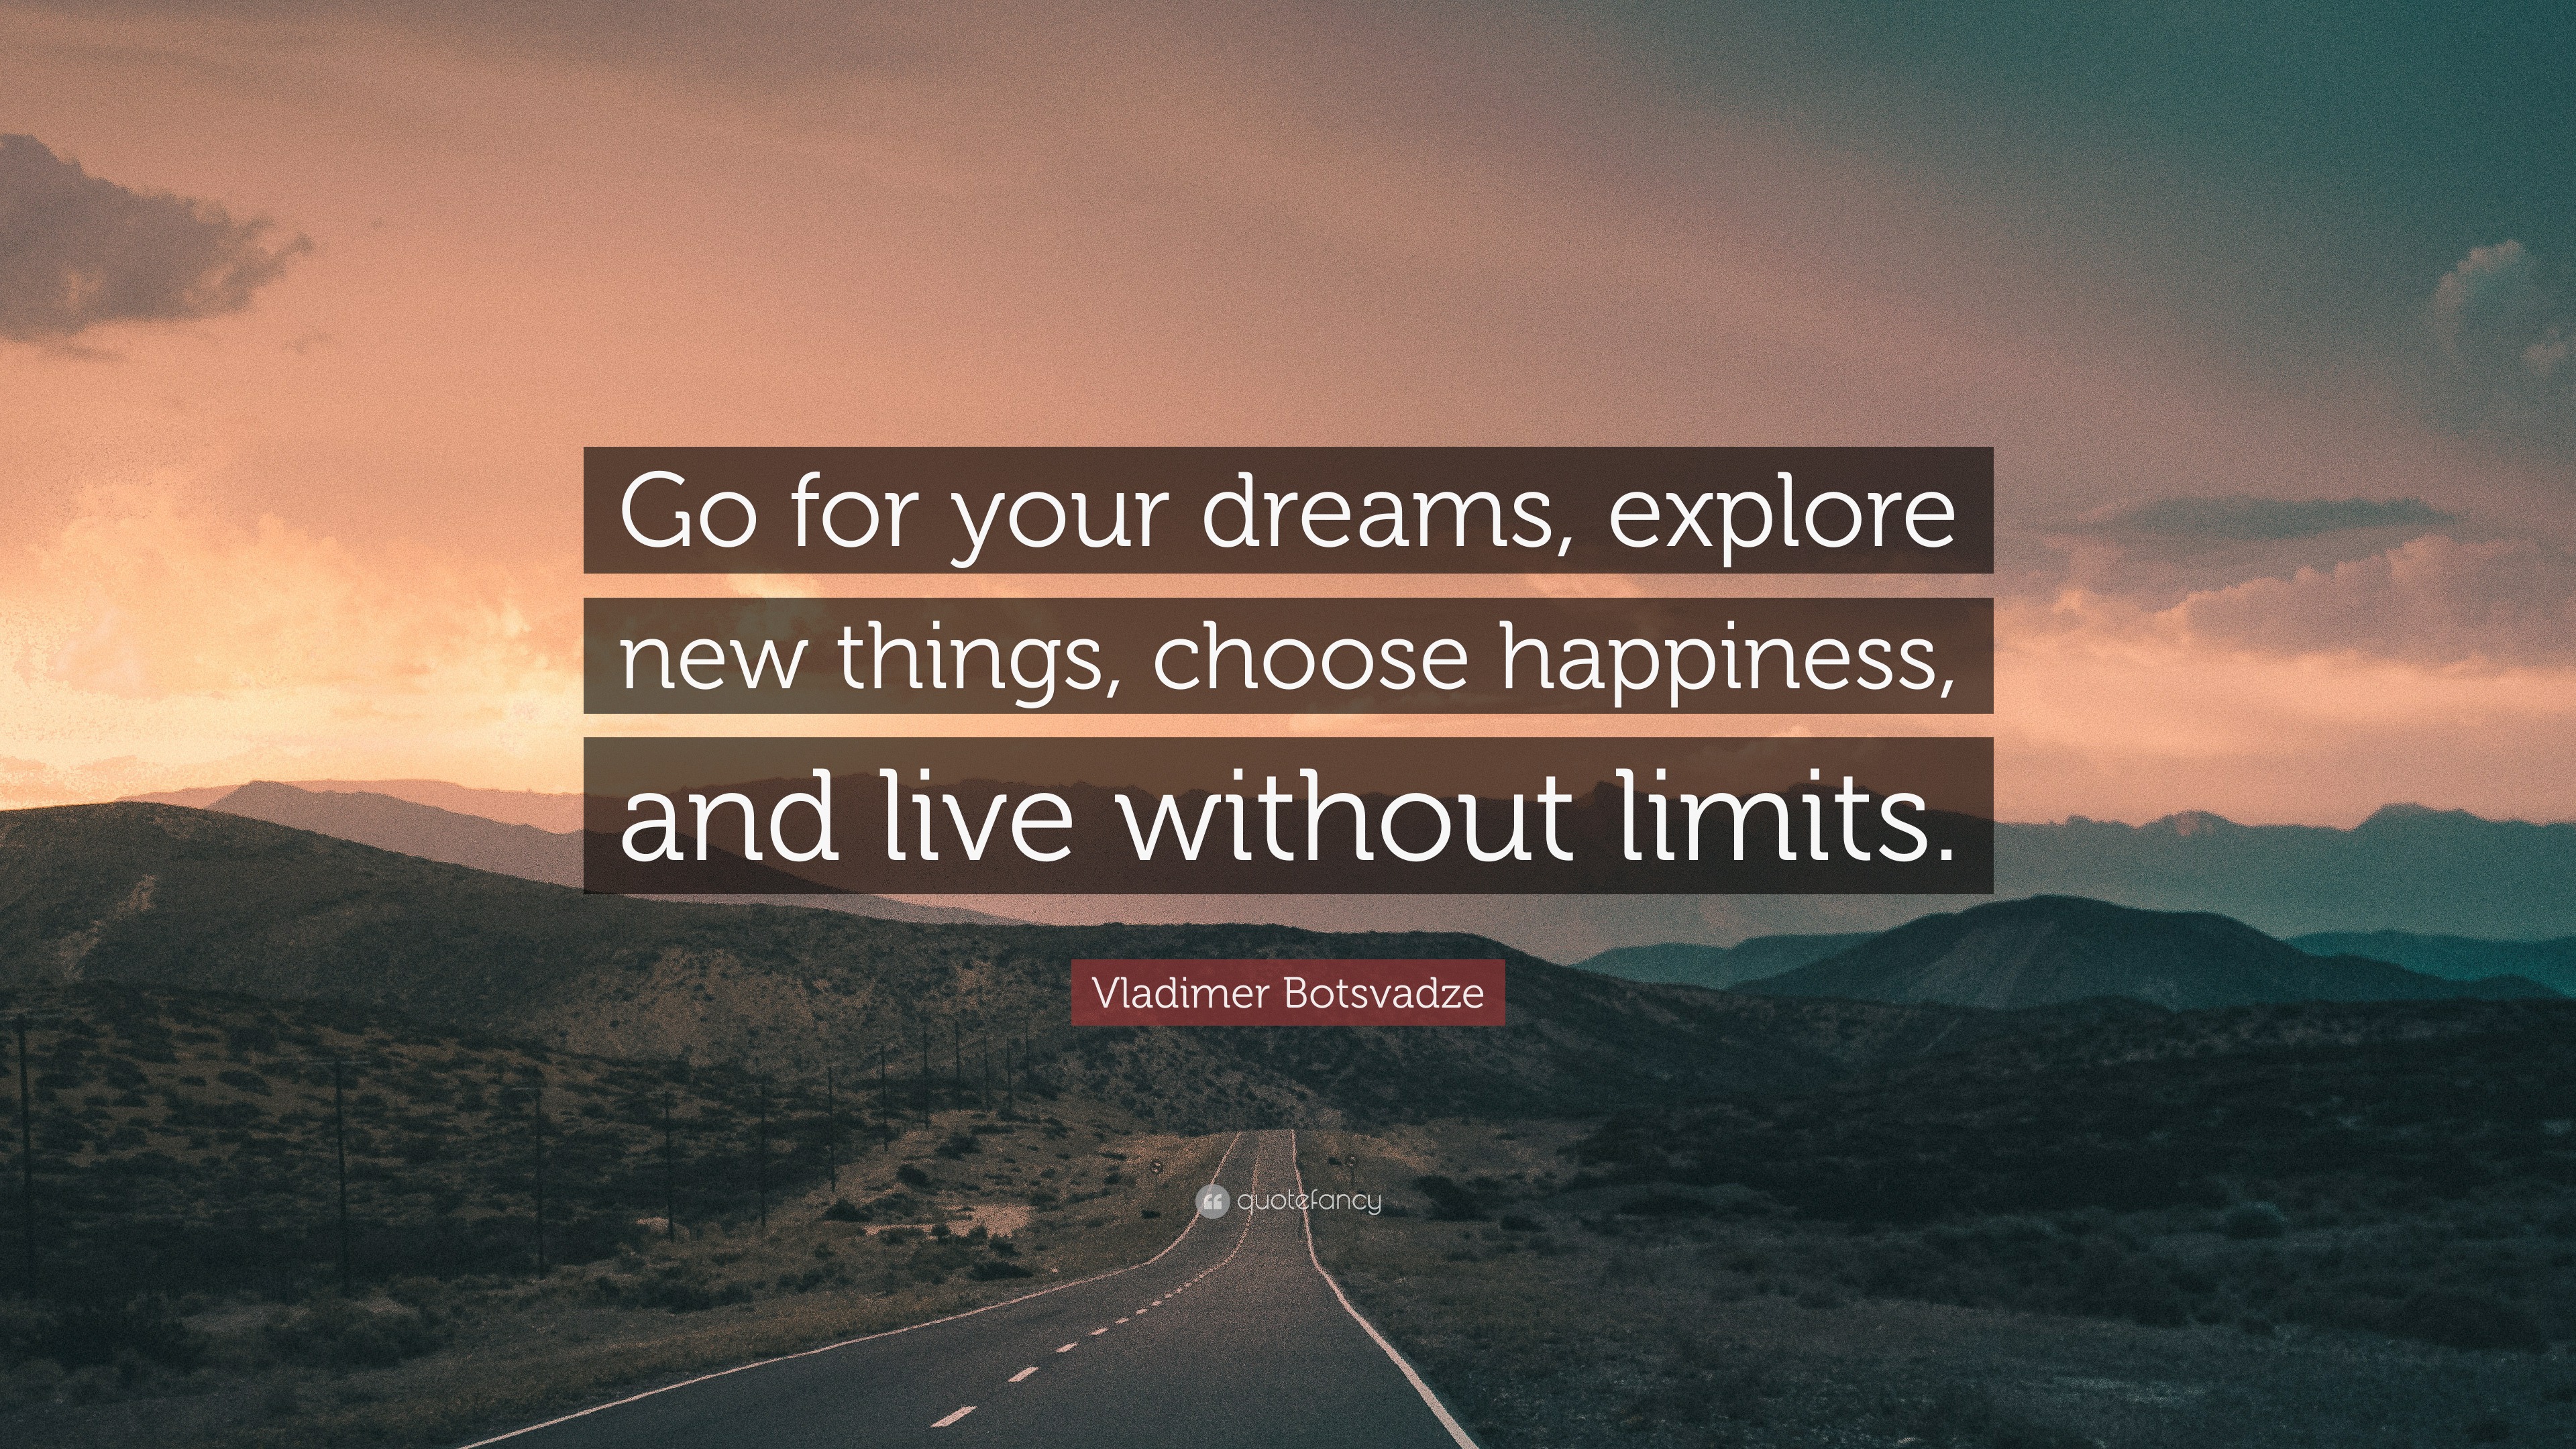 Vladimer Botsvadze Quote “Go for your dreams, explore new